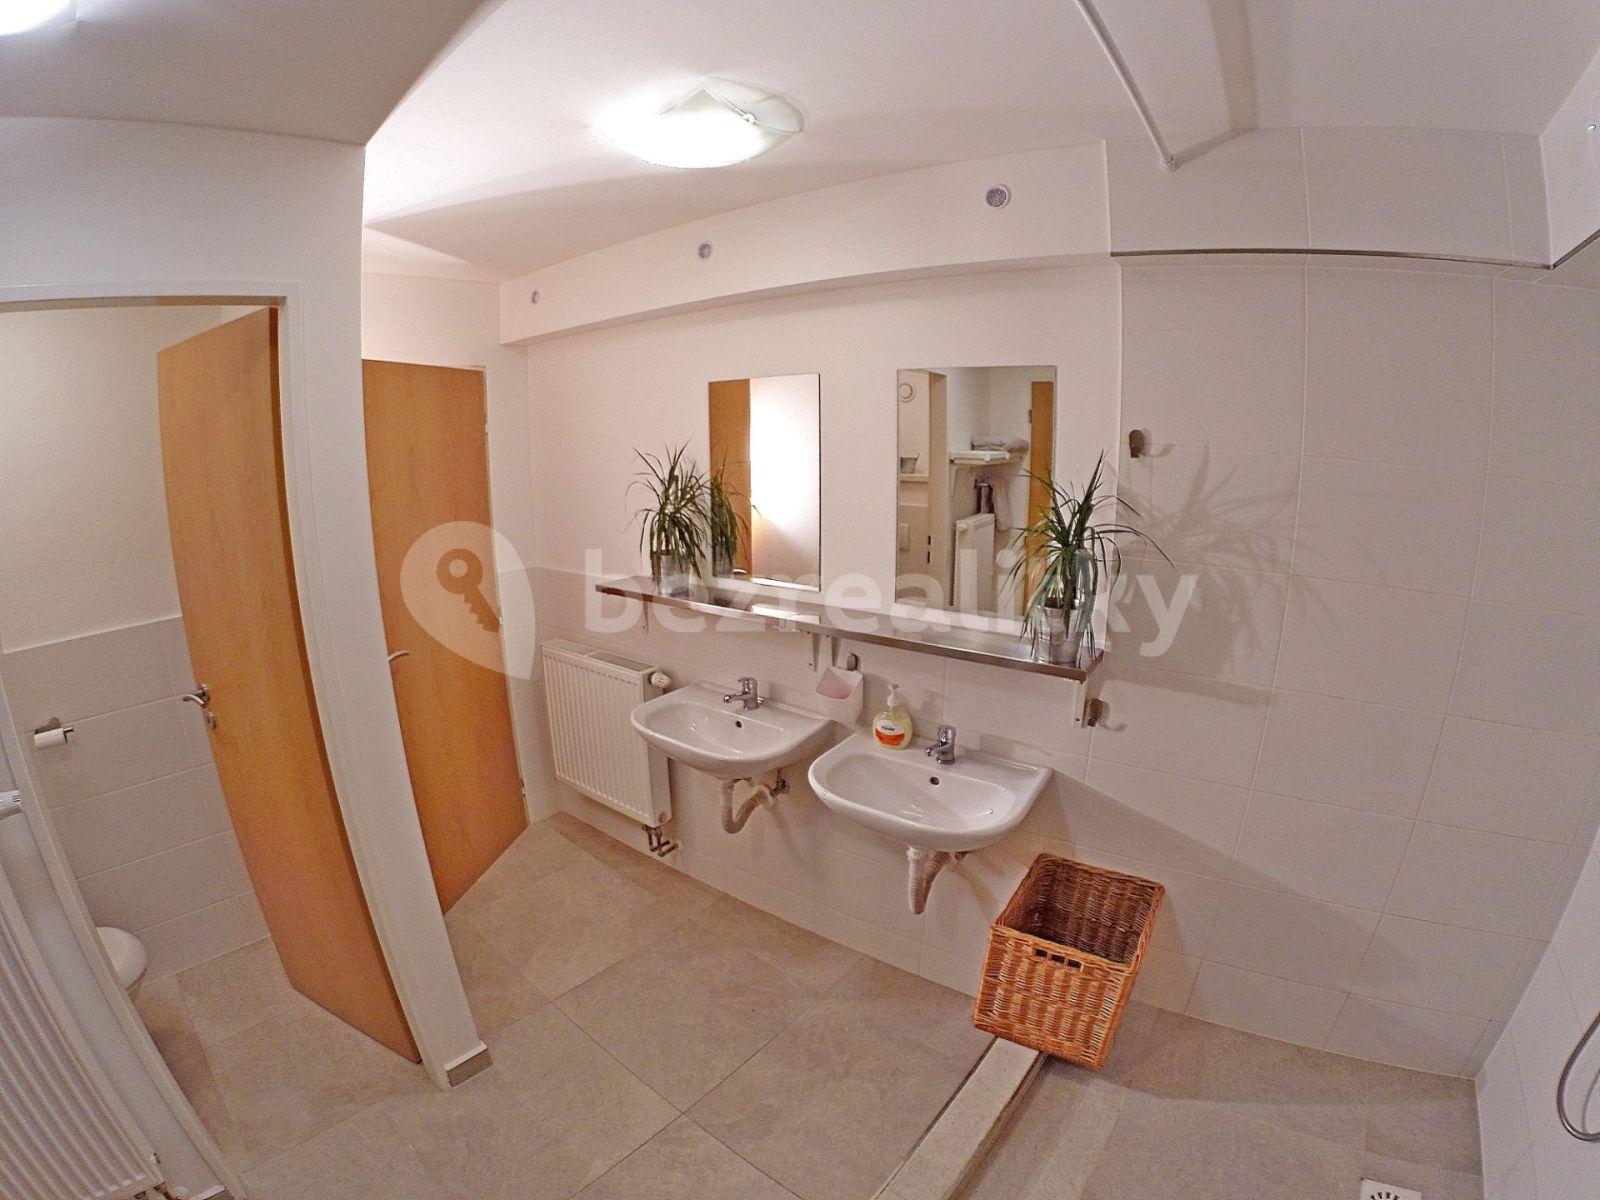 7 bedroom flat to rent, 16 m², Bystrcká, Brno, Jihomoravský Region